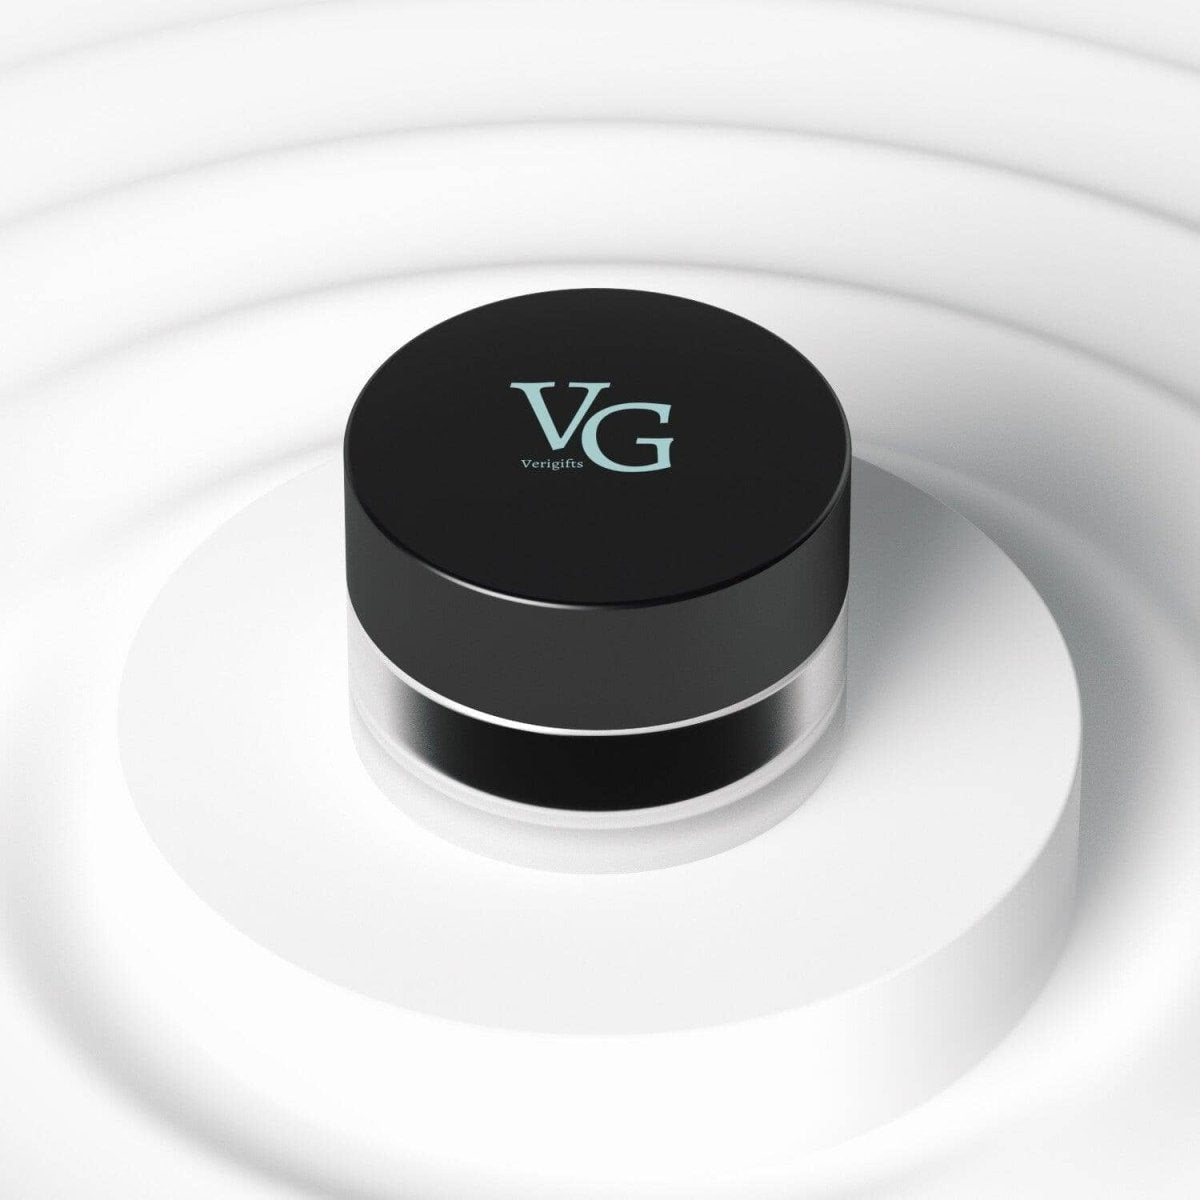 Black container of VG Cosmetics cruelty-free vegan gel eyeliner with brand logo